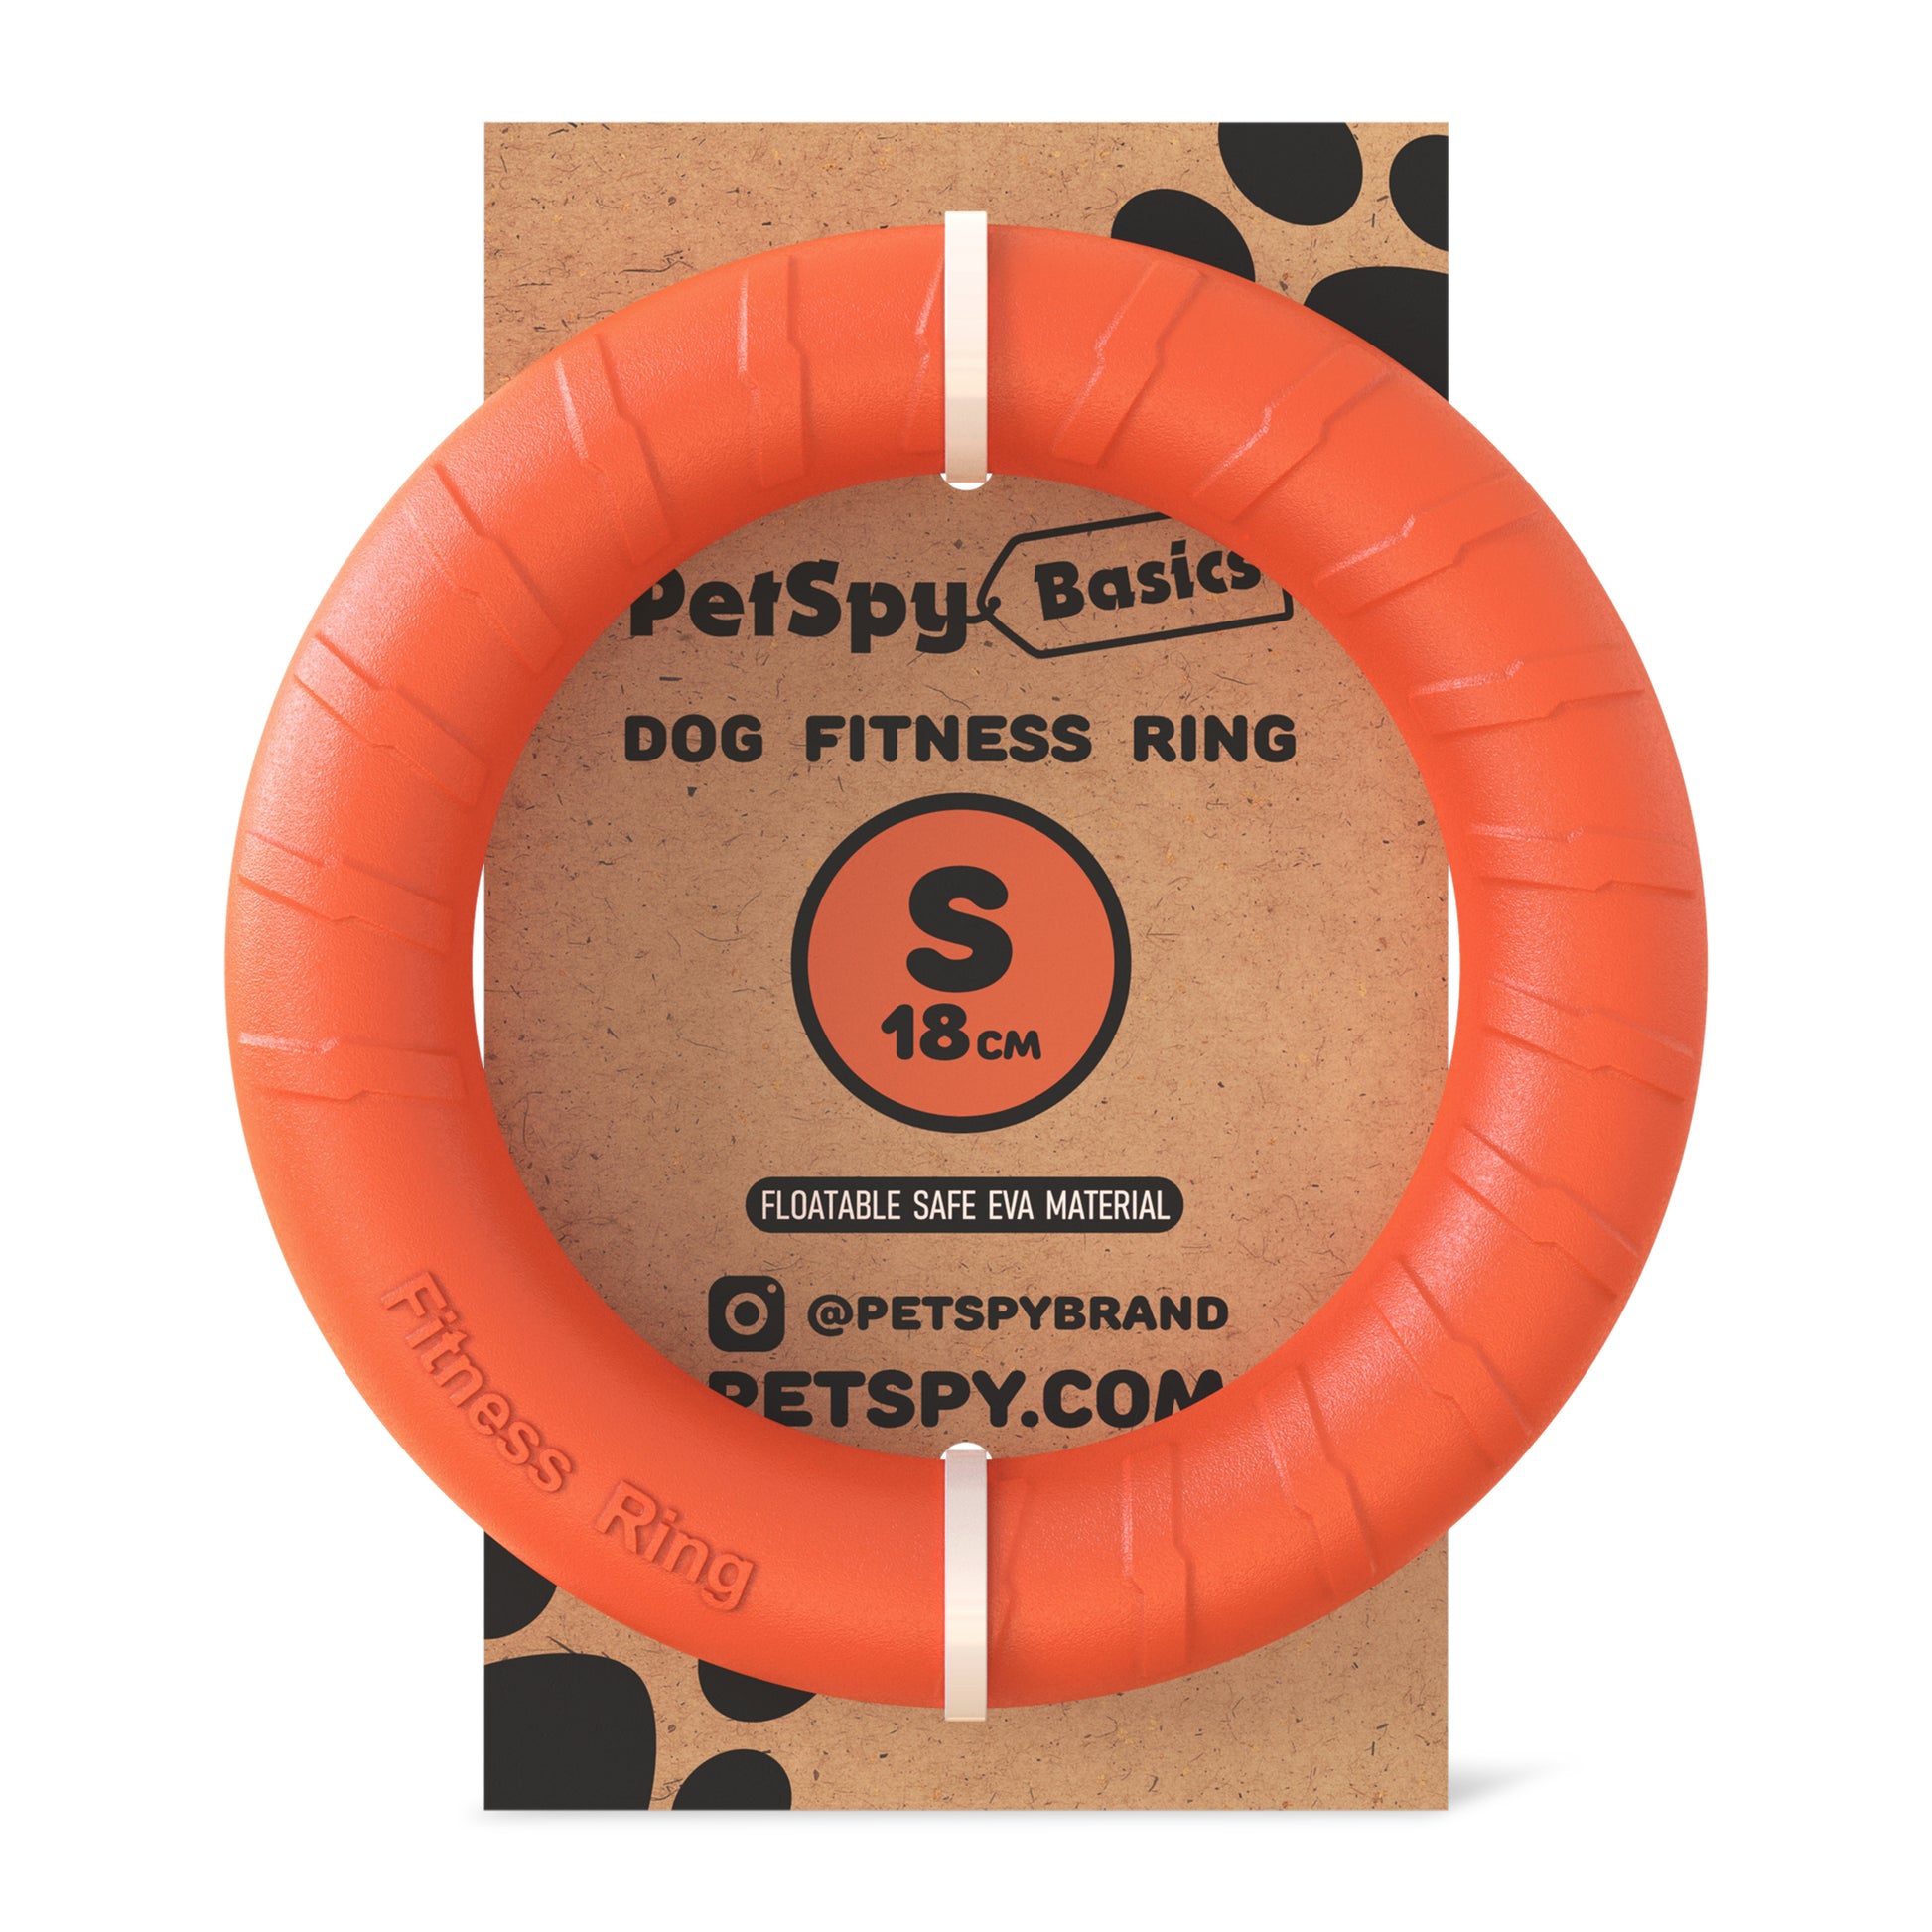 Dog ring toy: Dog fitness Ring toy & Flying fitness - Petspy